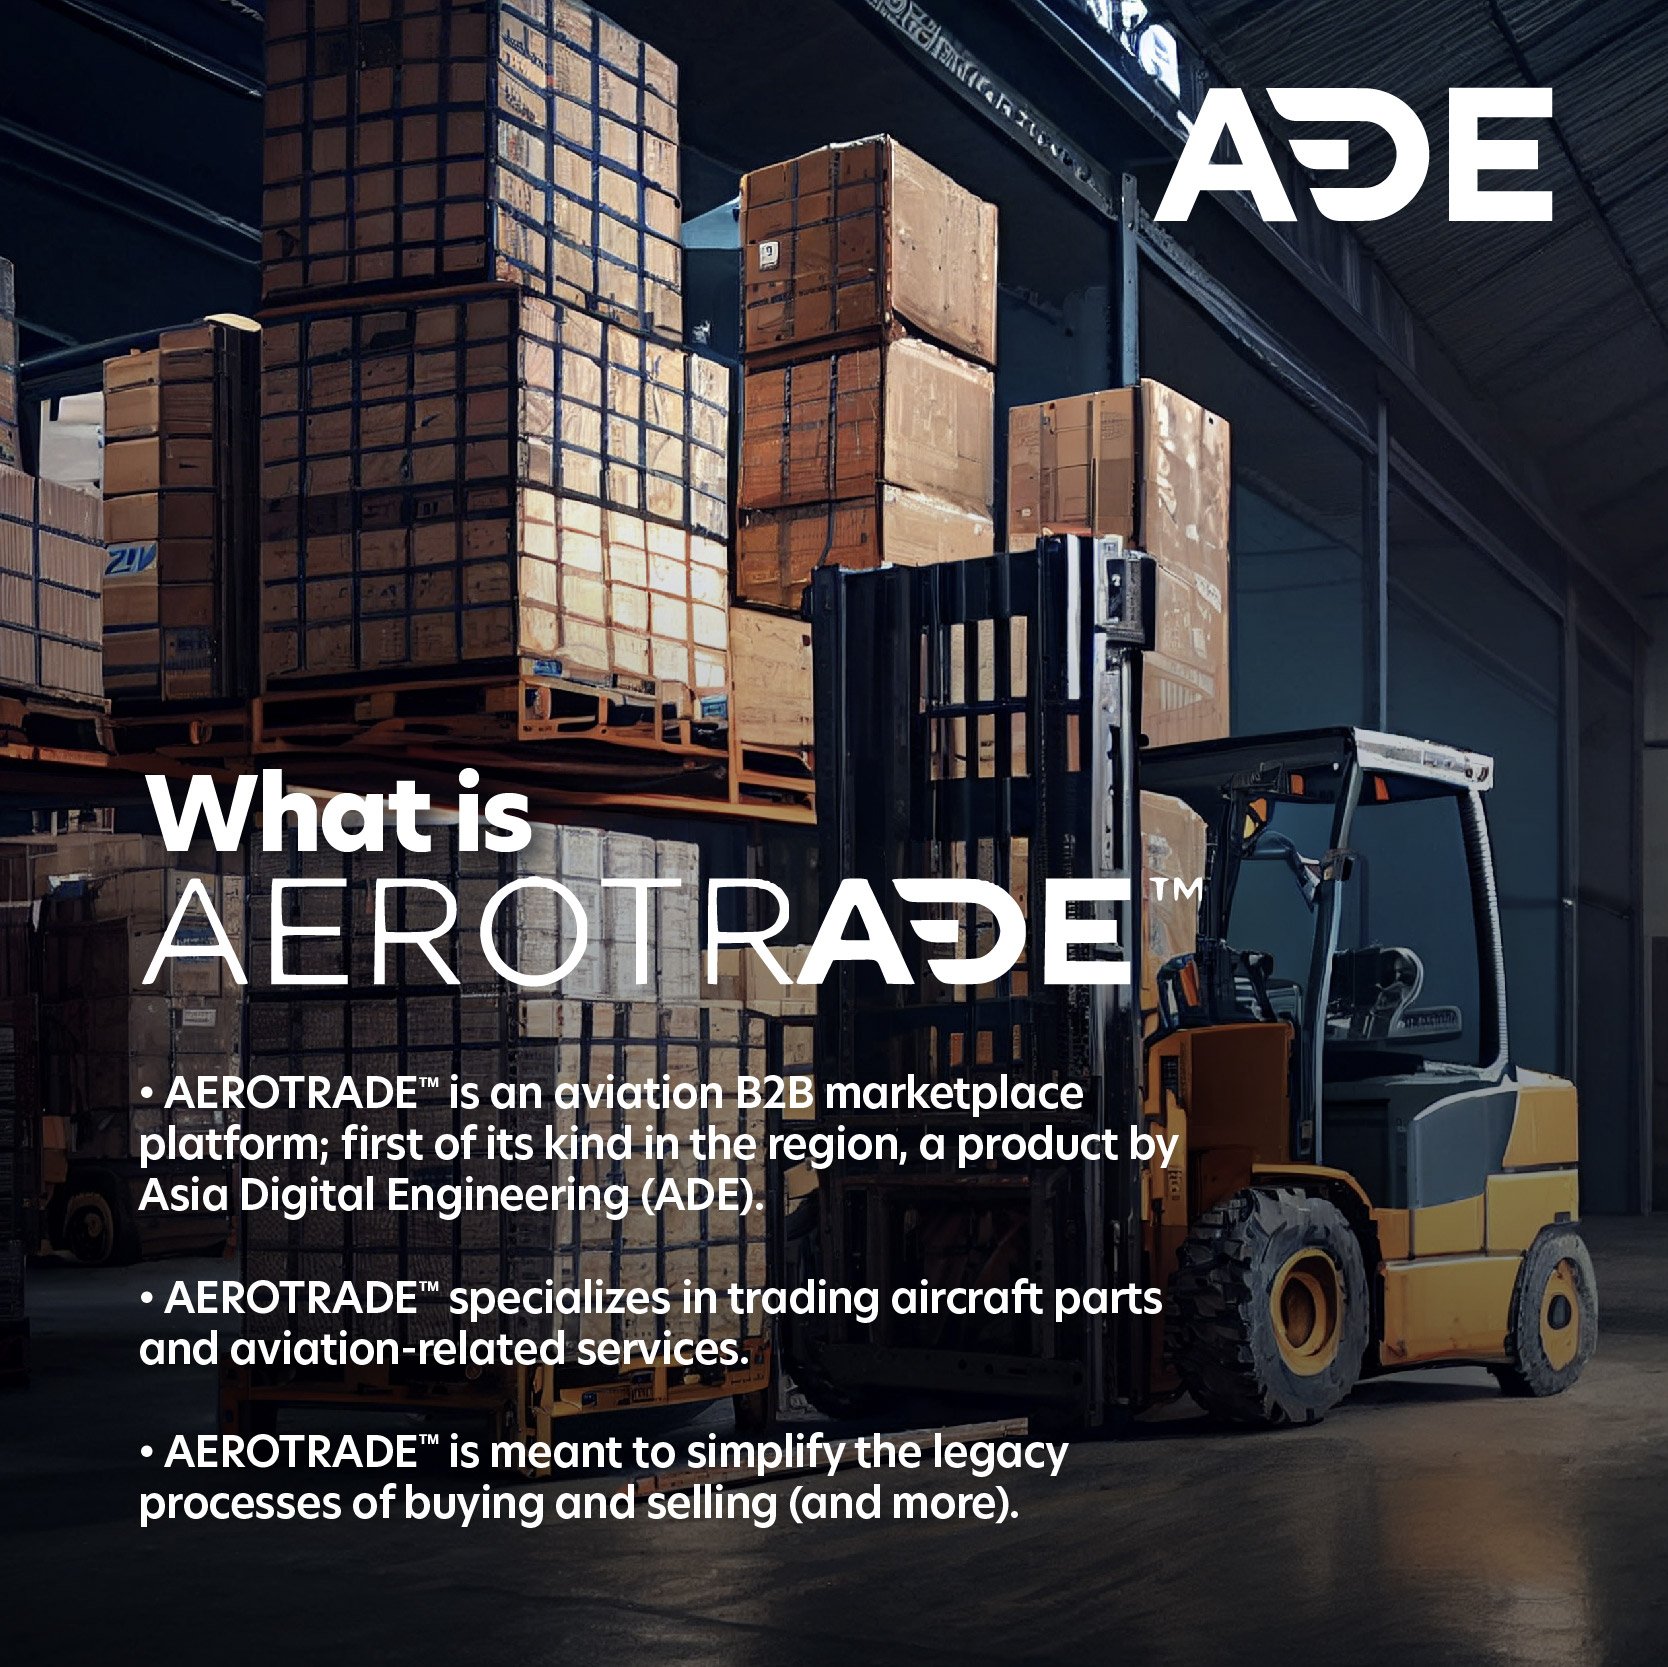 ADE - Aerotrade-01.jpg